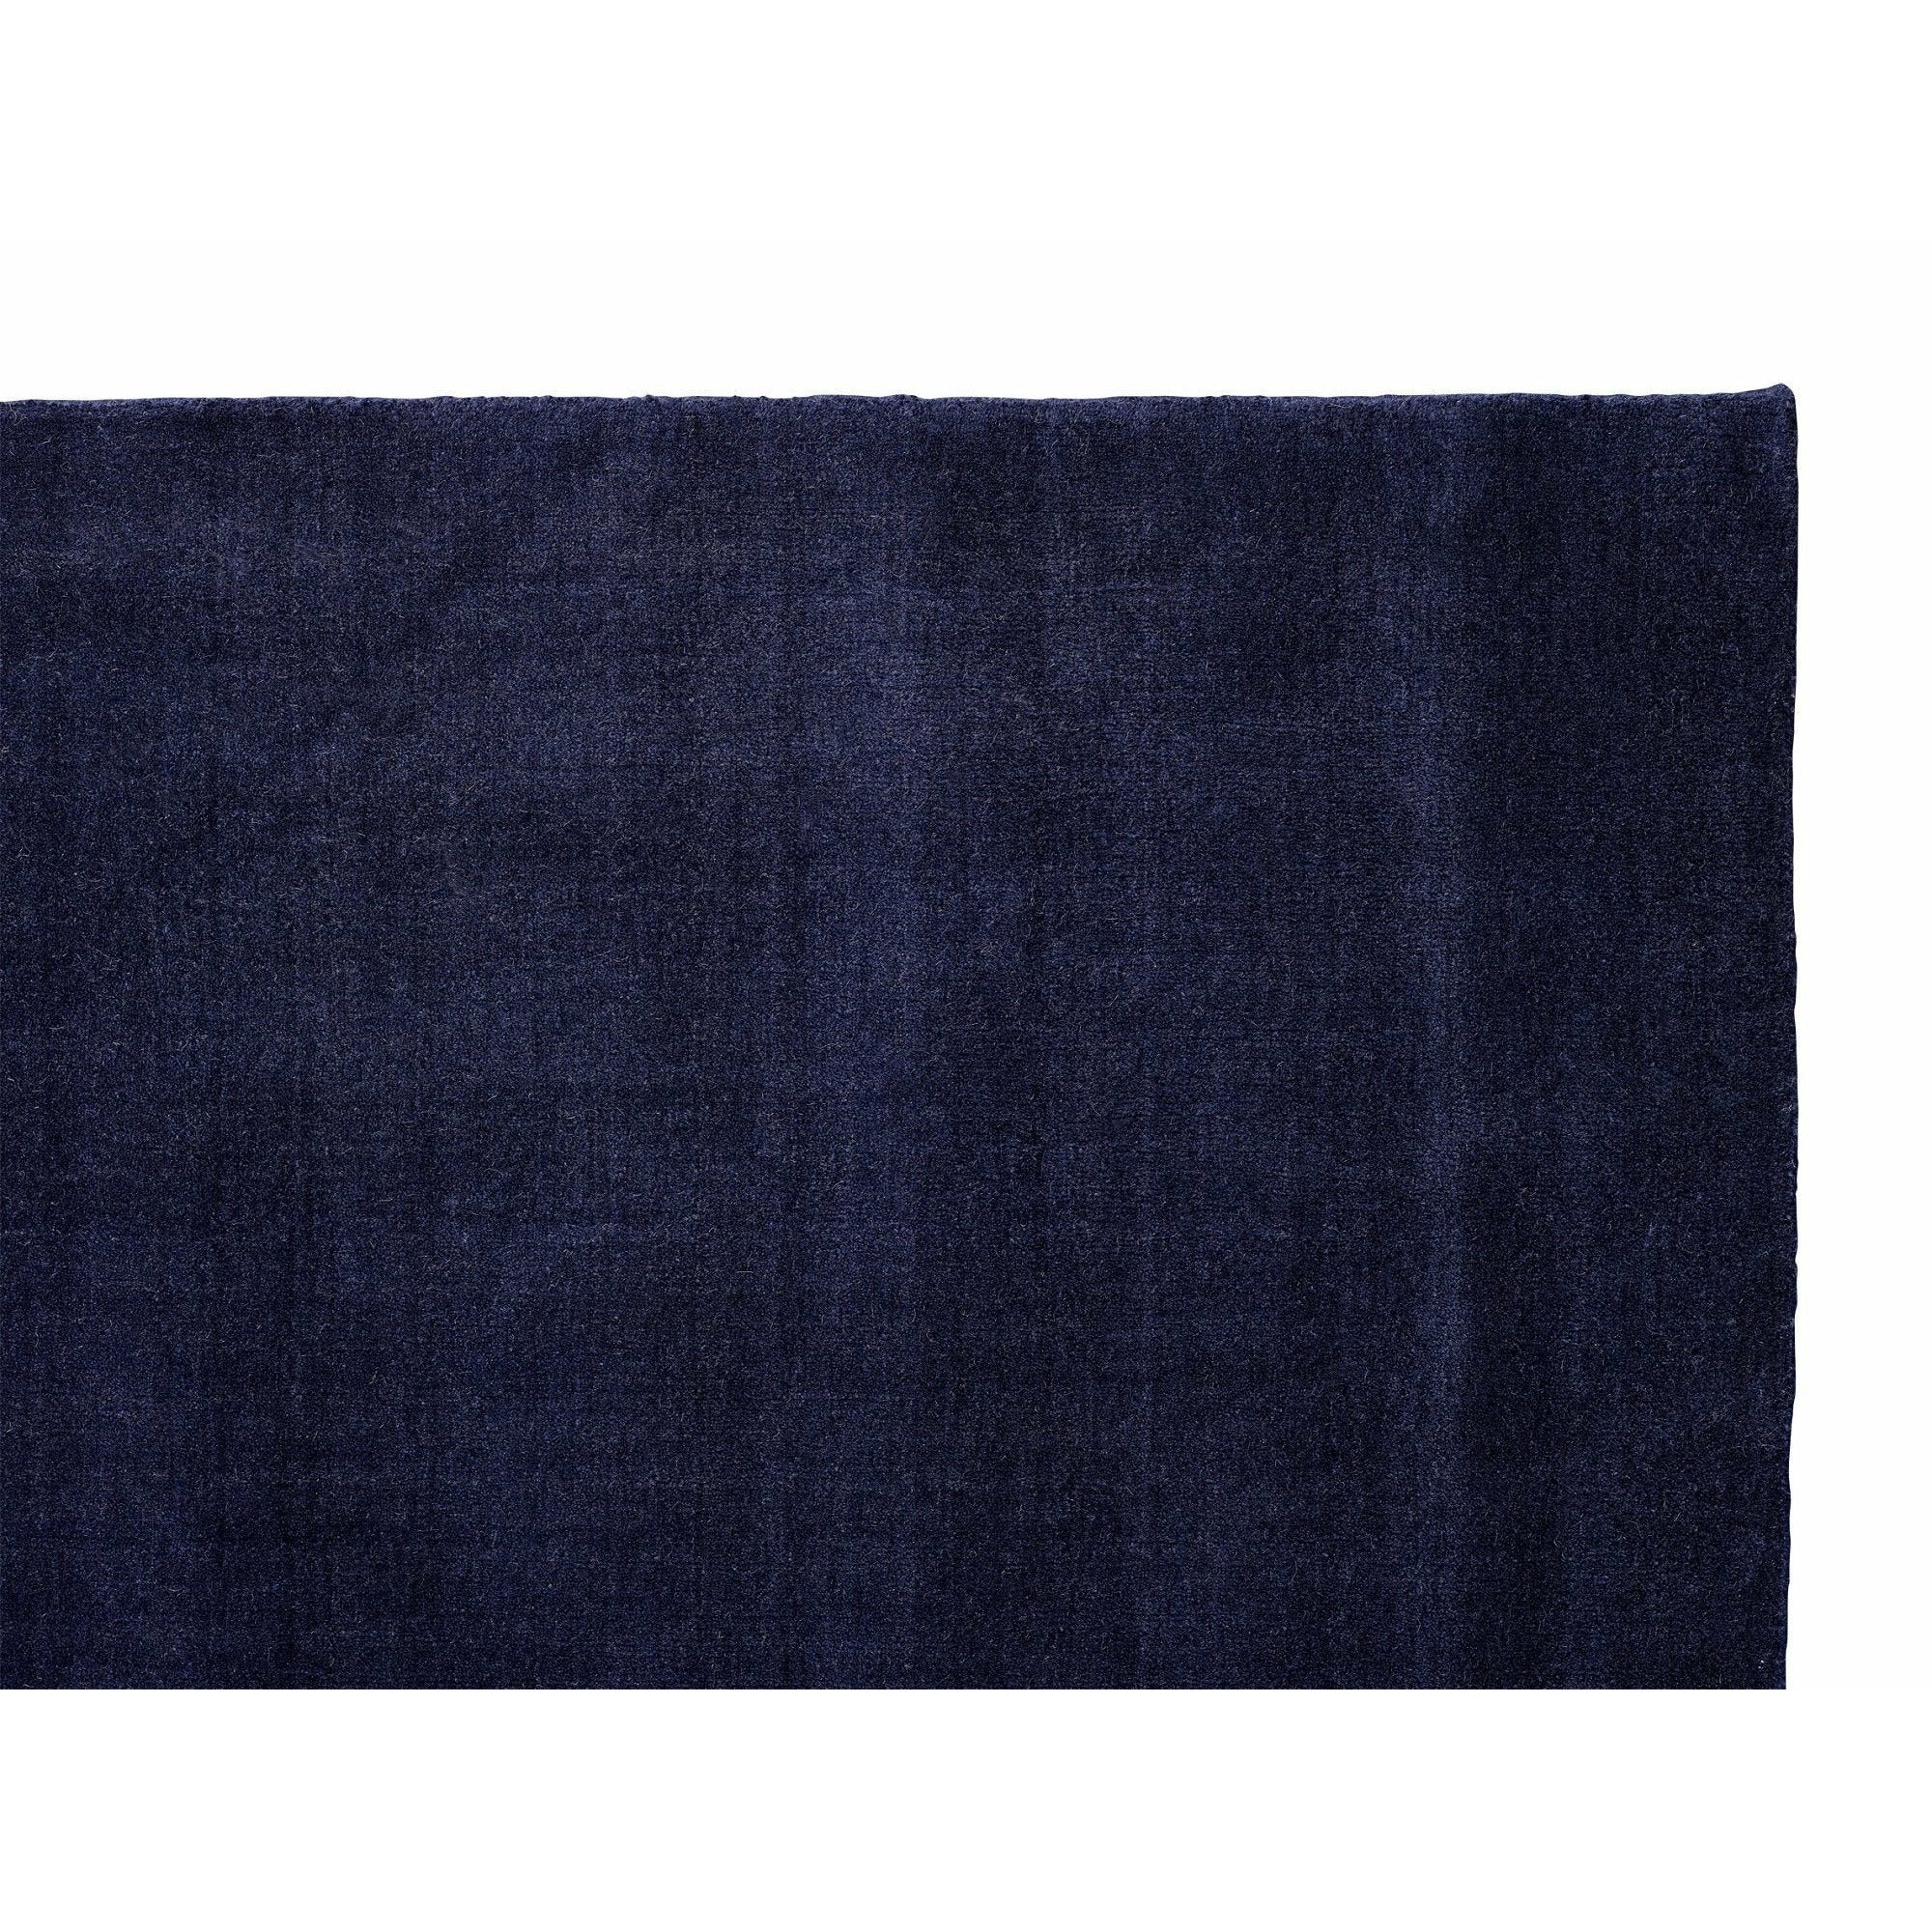 Massimo Erde Bambus Teppich Vibrant Blau, 250x300 Cm